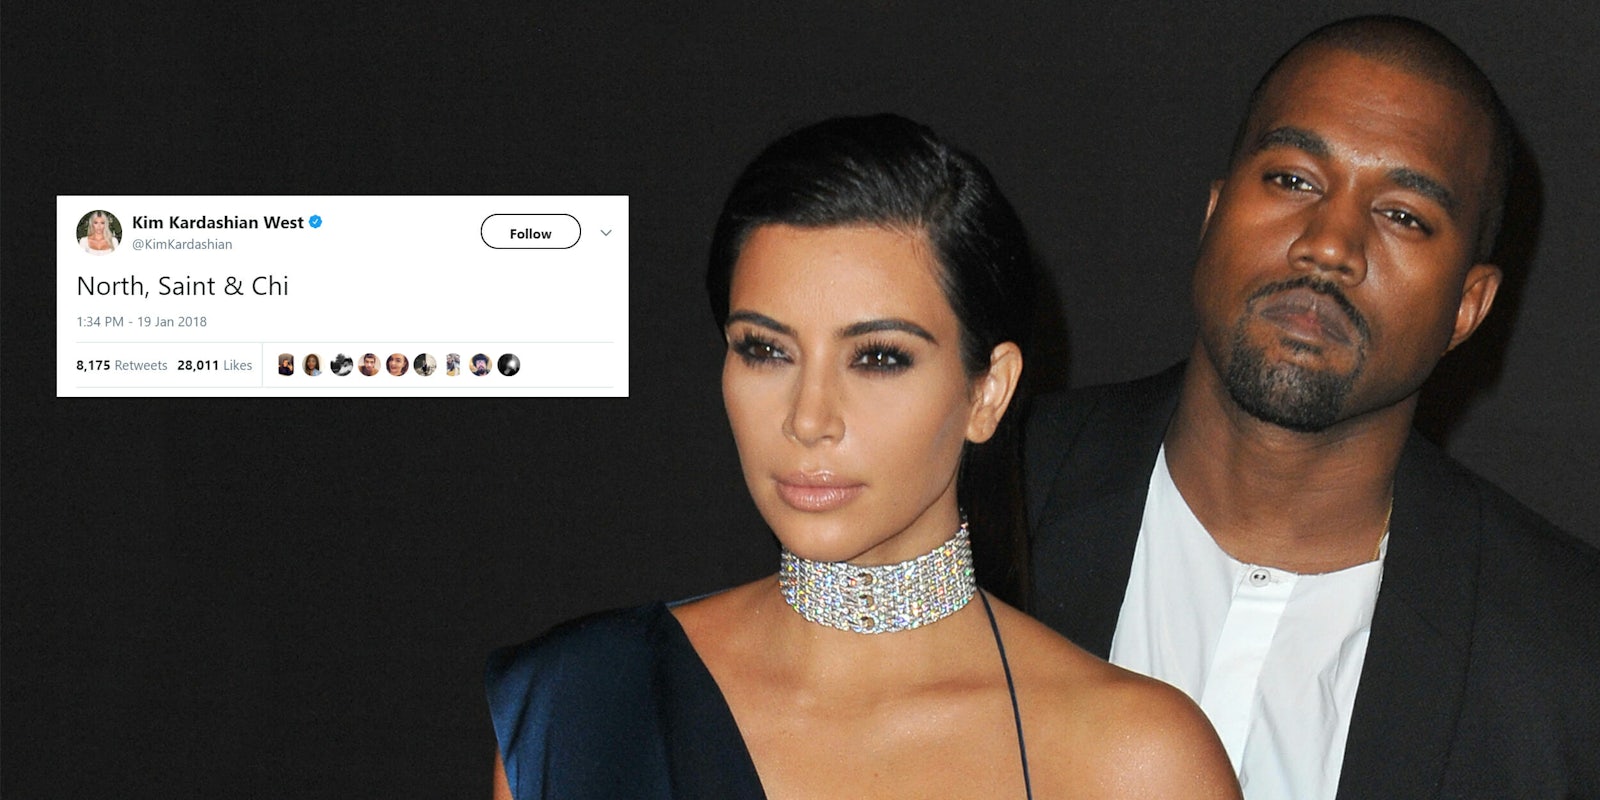 Kim Kardashian and Kanye West with 'North, Saint & Chi' tweet